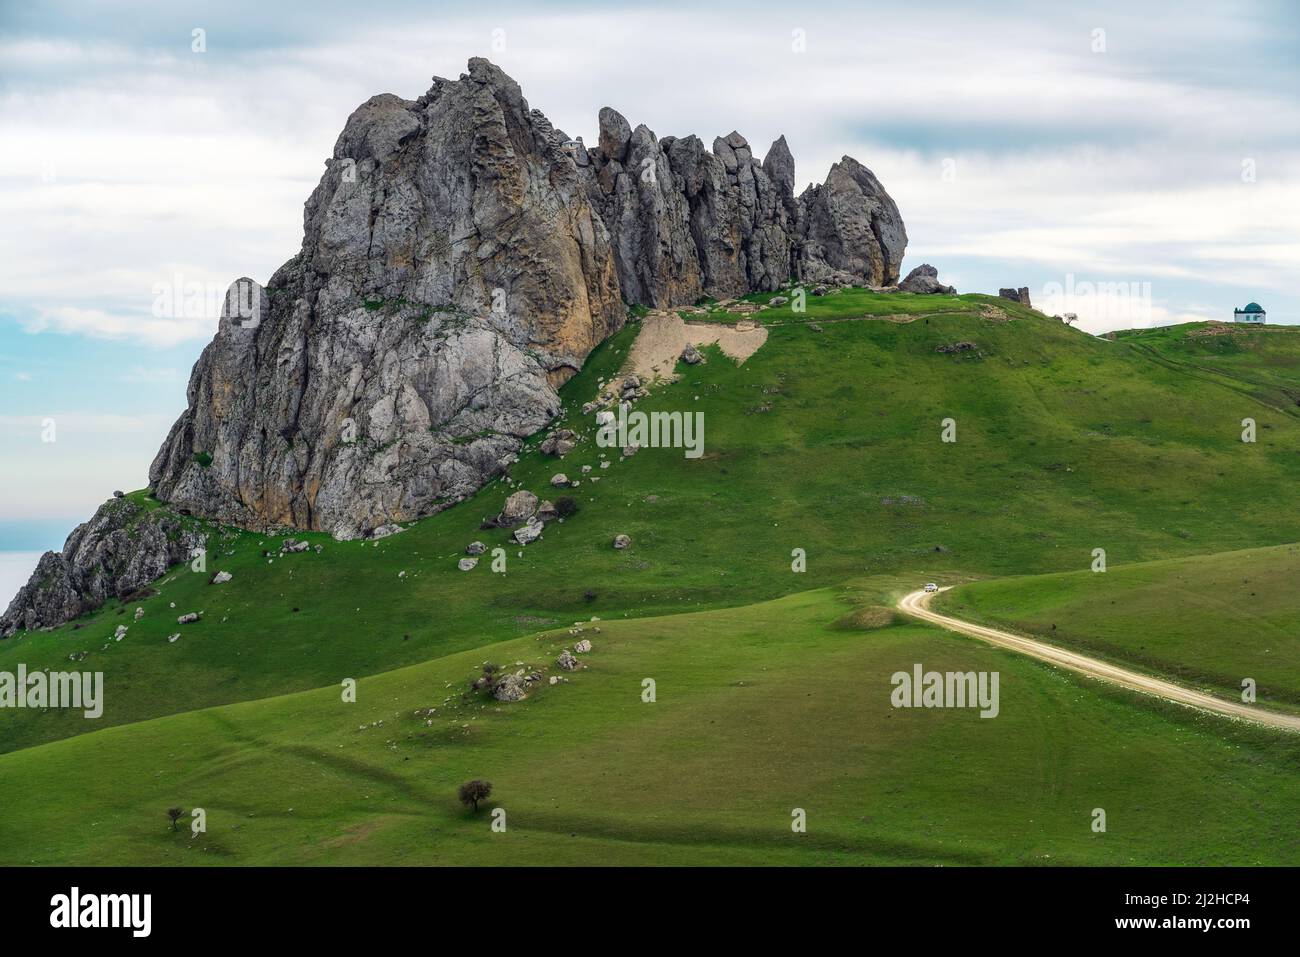 Rocky peak of holy mountain Beshbarmag located in Azerbaijan Republic Stock Photo